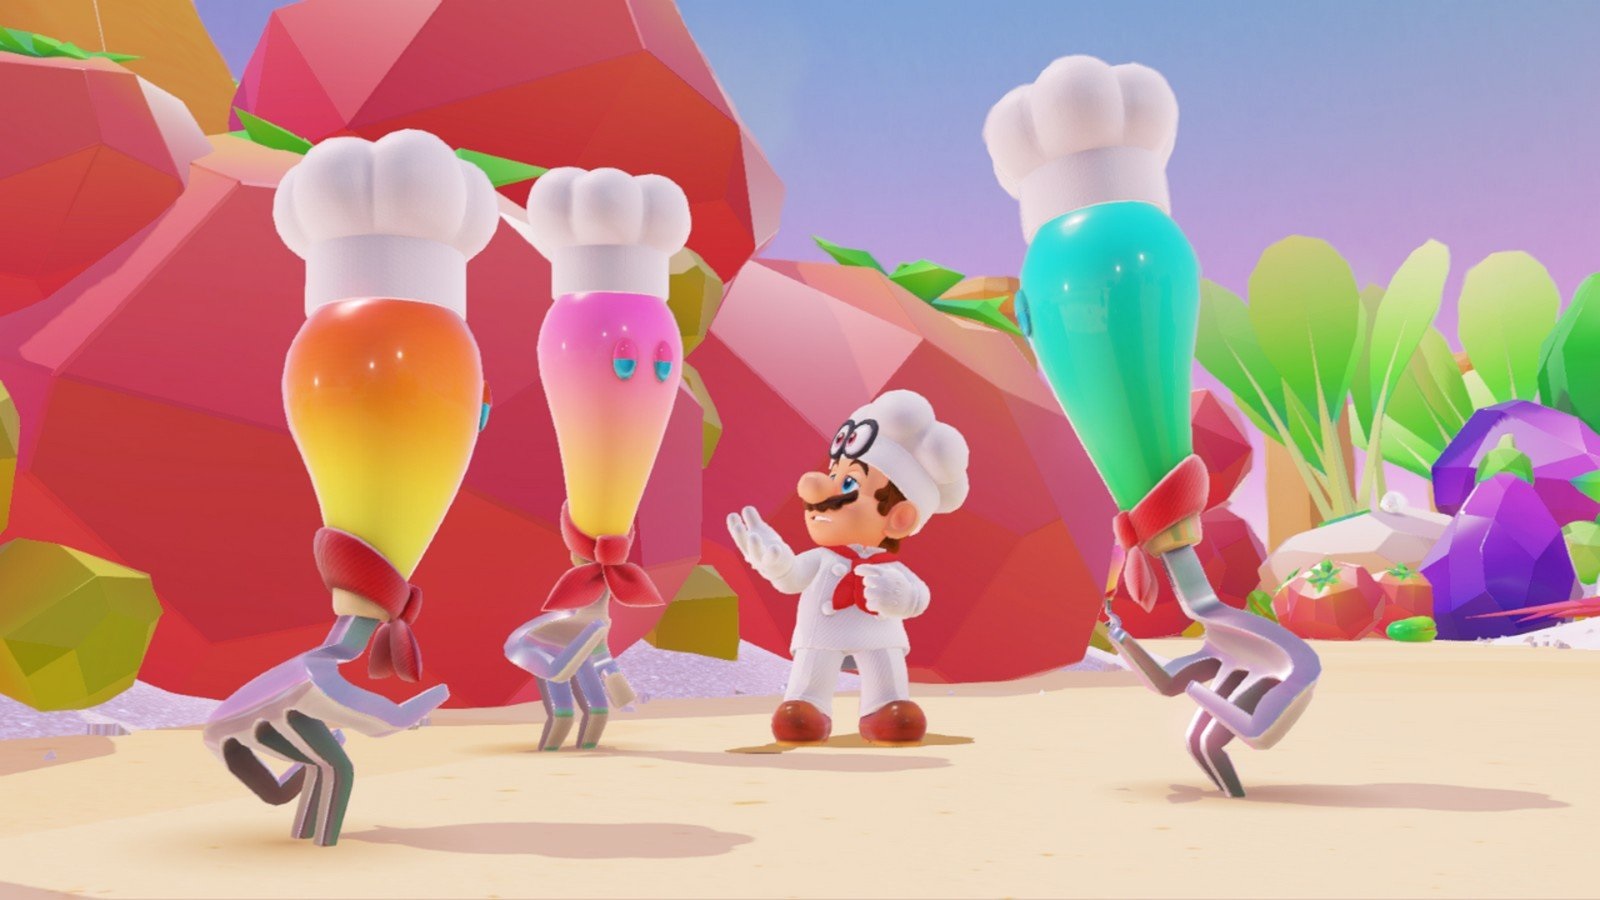 Faktisk Bunke af Gentleman Super Mario Odyssey's VR update will include a theater mode – Destructoid